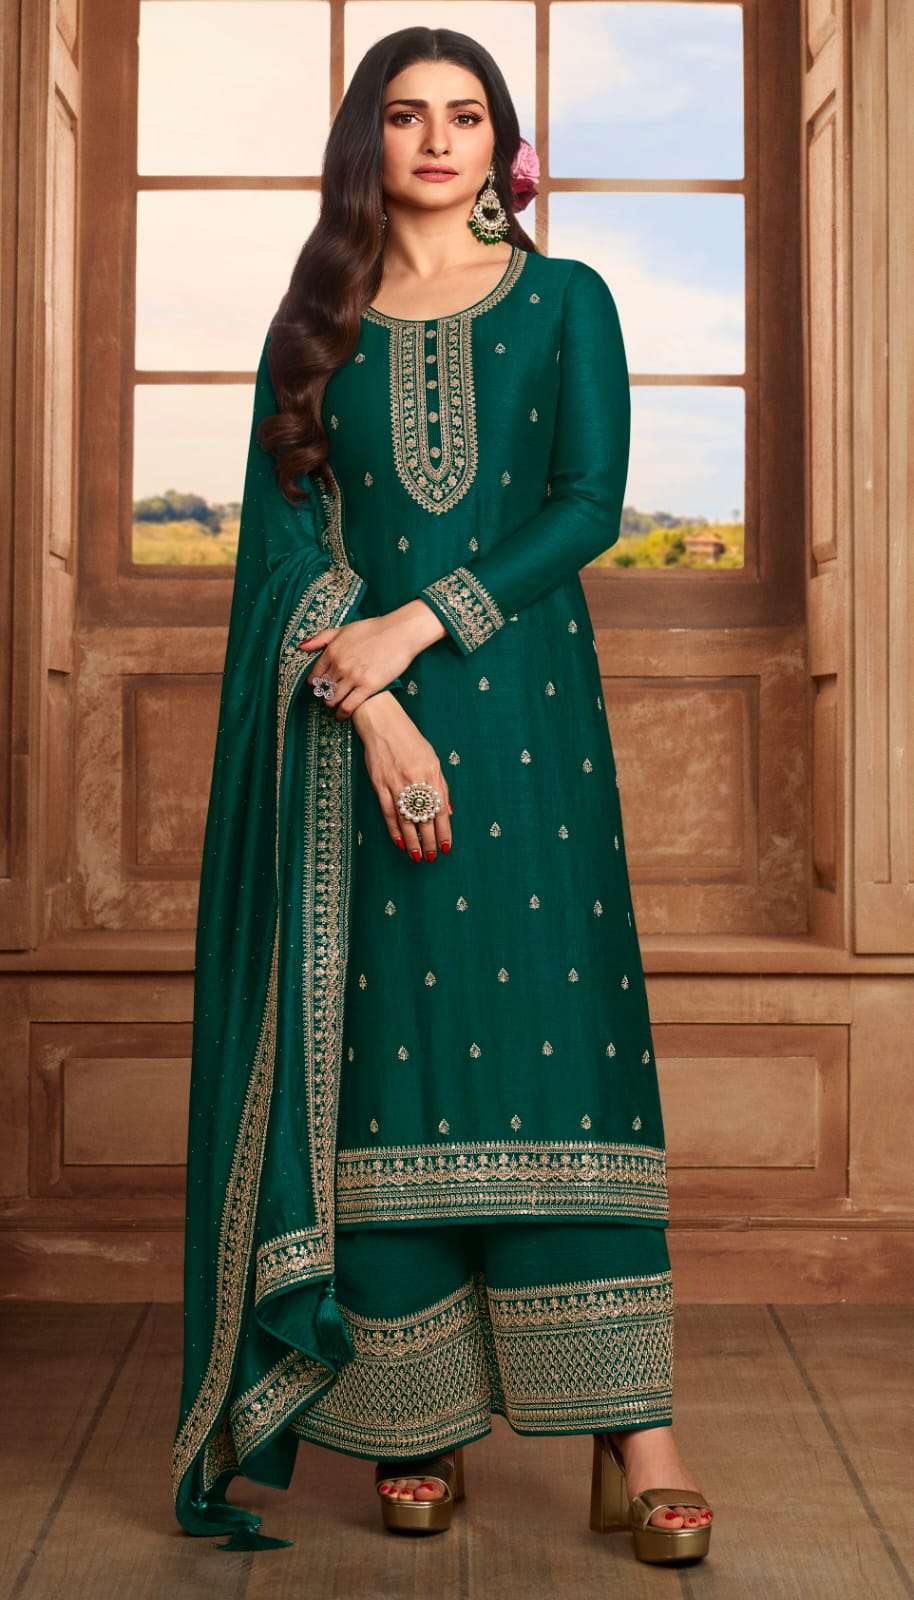 Shaheen 3 Buy Vinay Fashion Online Wholesaler Latest Collection Unstitched Salwar Suit